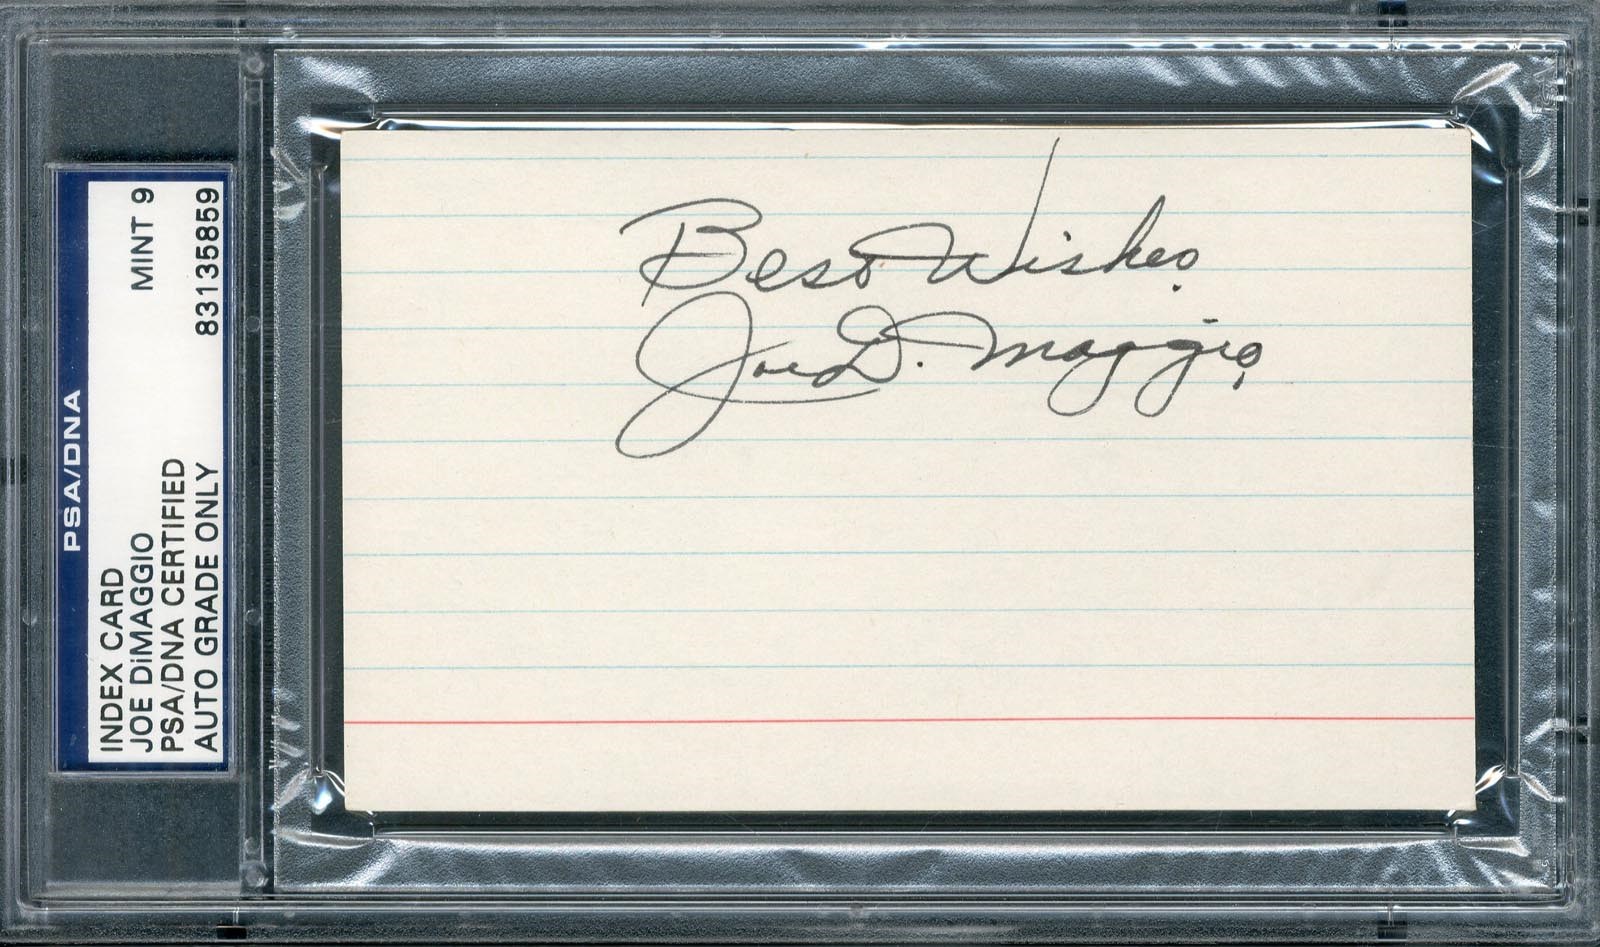 NY Yankees, Giants & Mets - Mint Joe DiMaggio Signed Index Card (PSA 9)